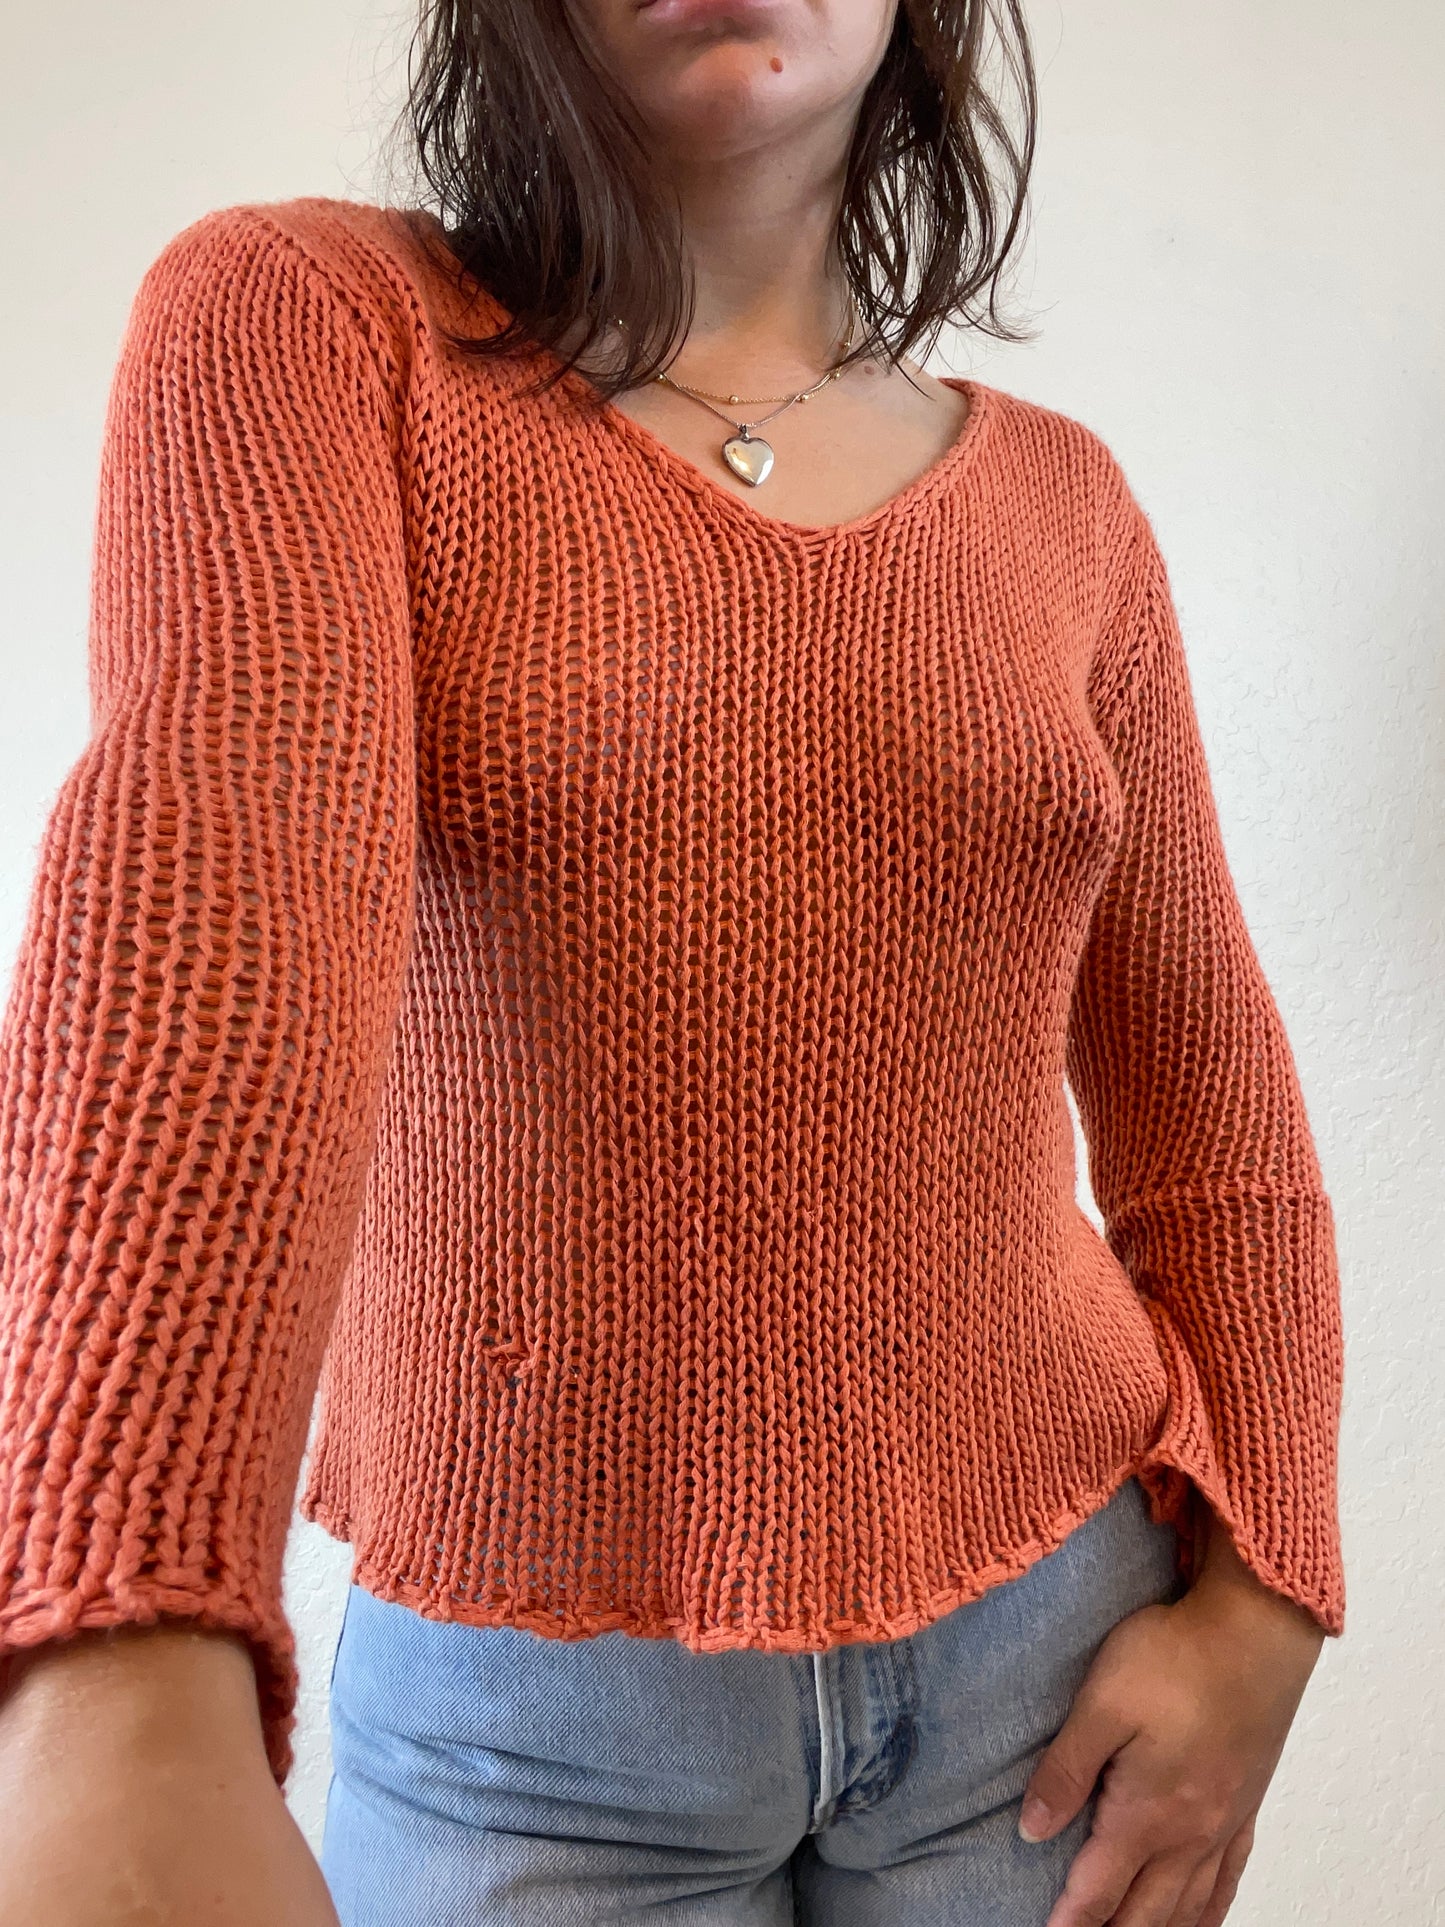 Orange crochet sweater